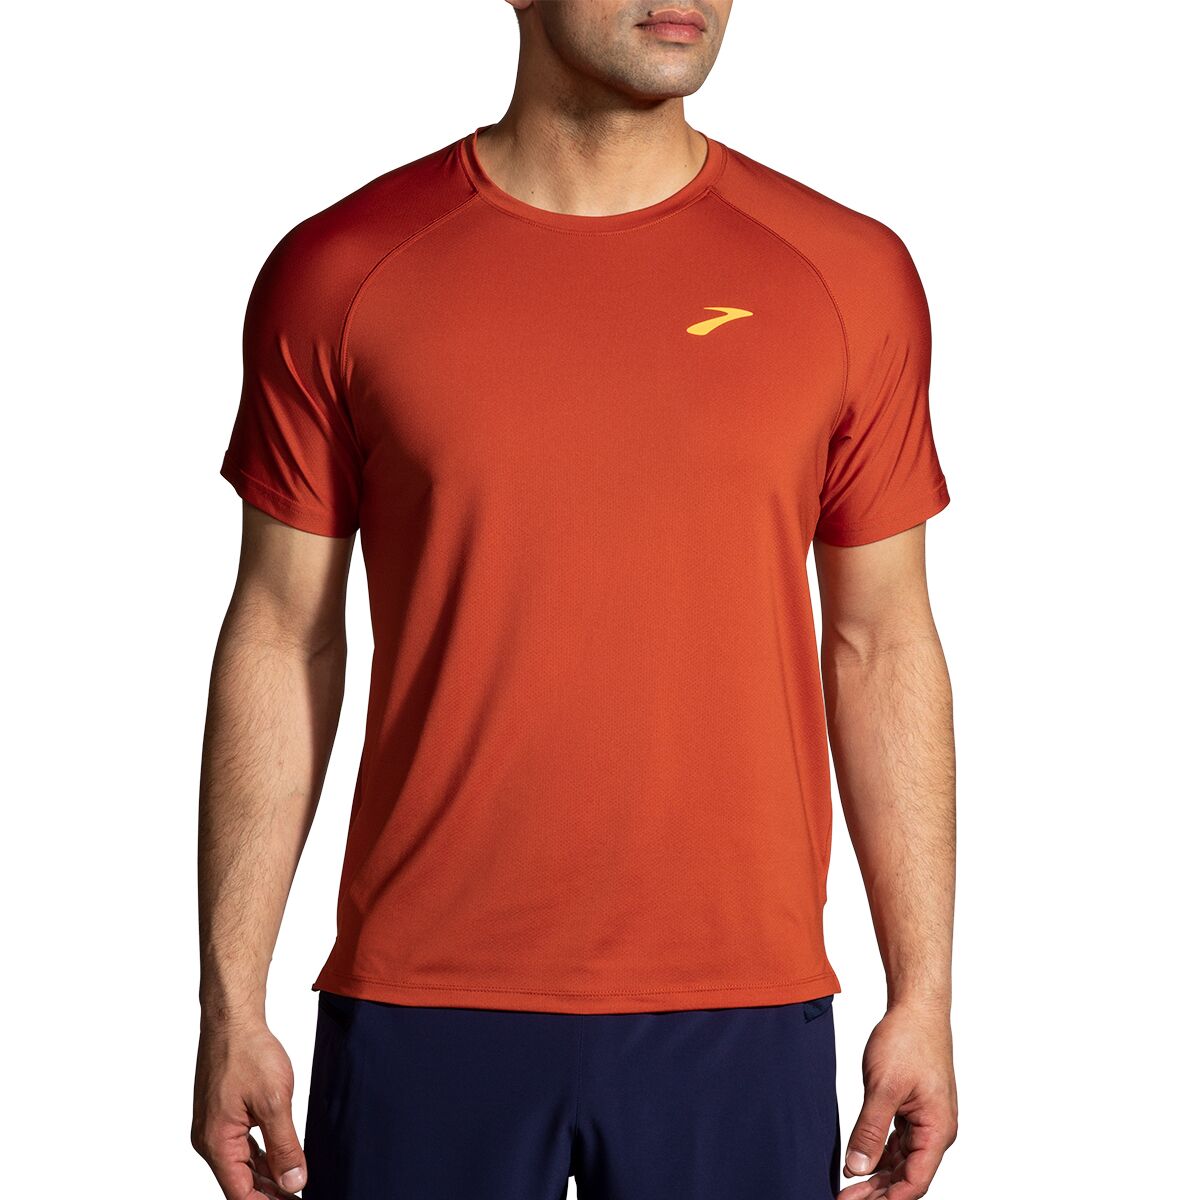 Atmosphere Short-Sleeve Shirt 2.0 - Men